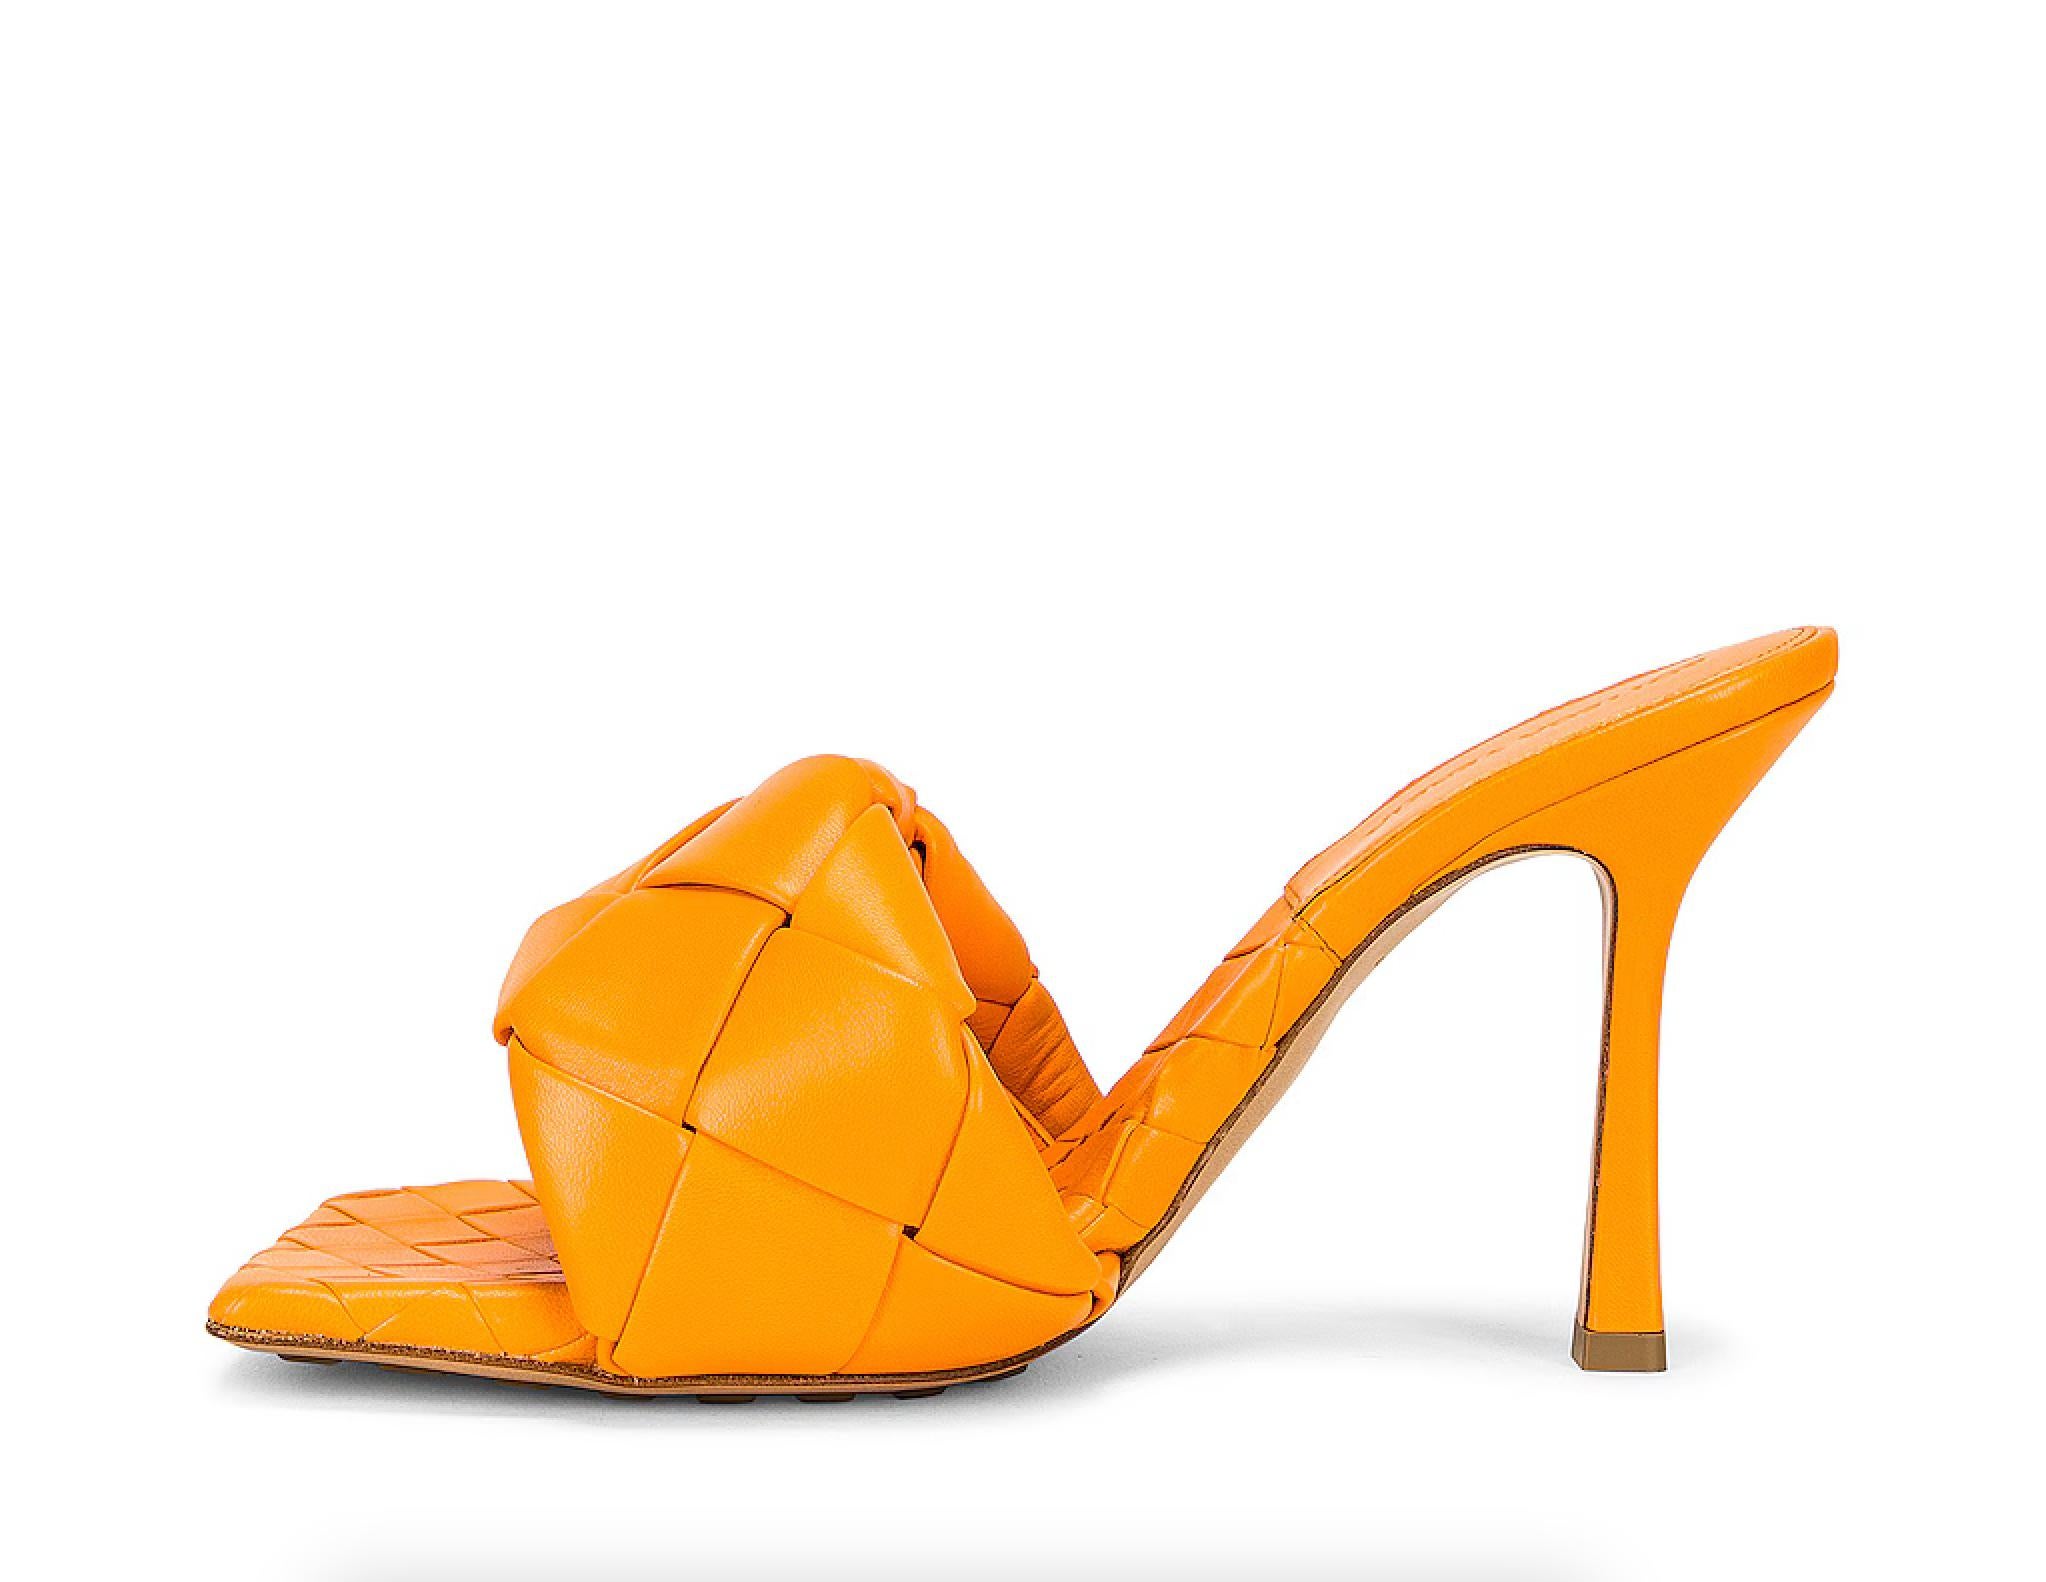 Bottega Veneta Lido Sandals in Tangerine Sz 36 For Sale 1